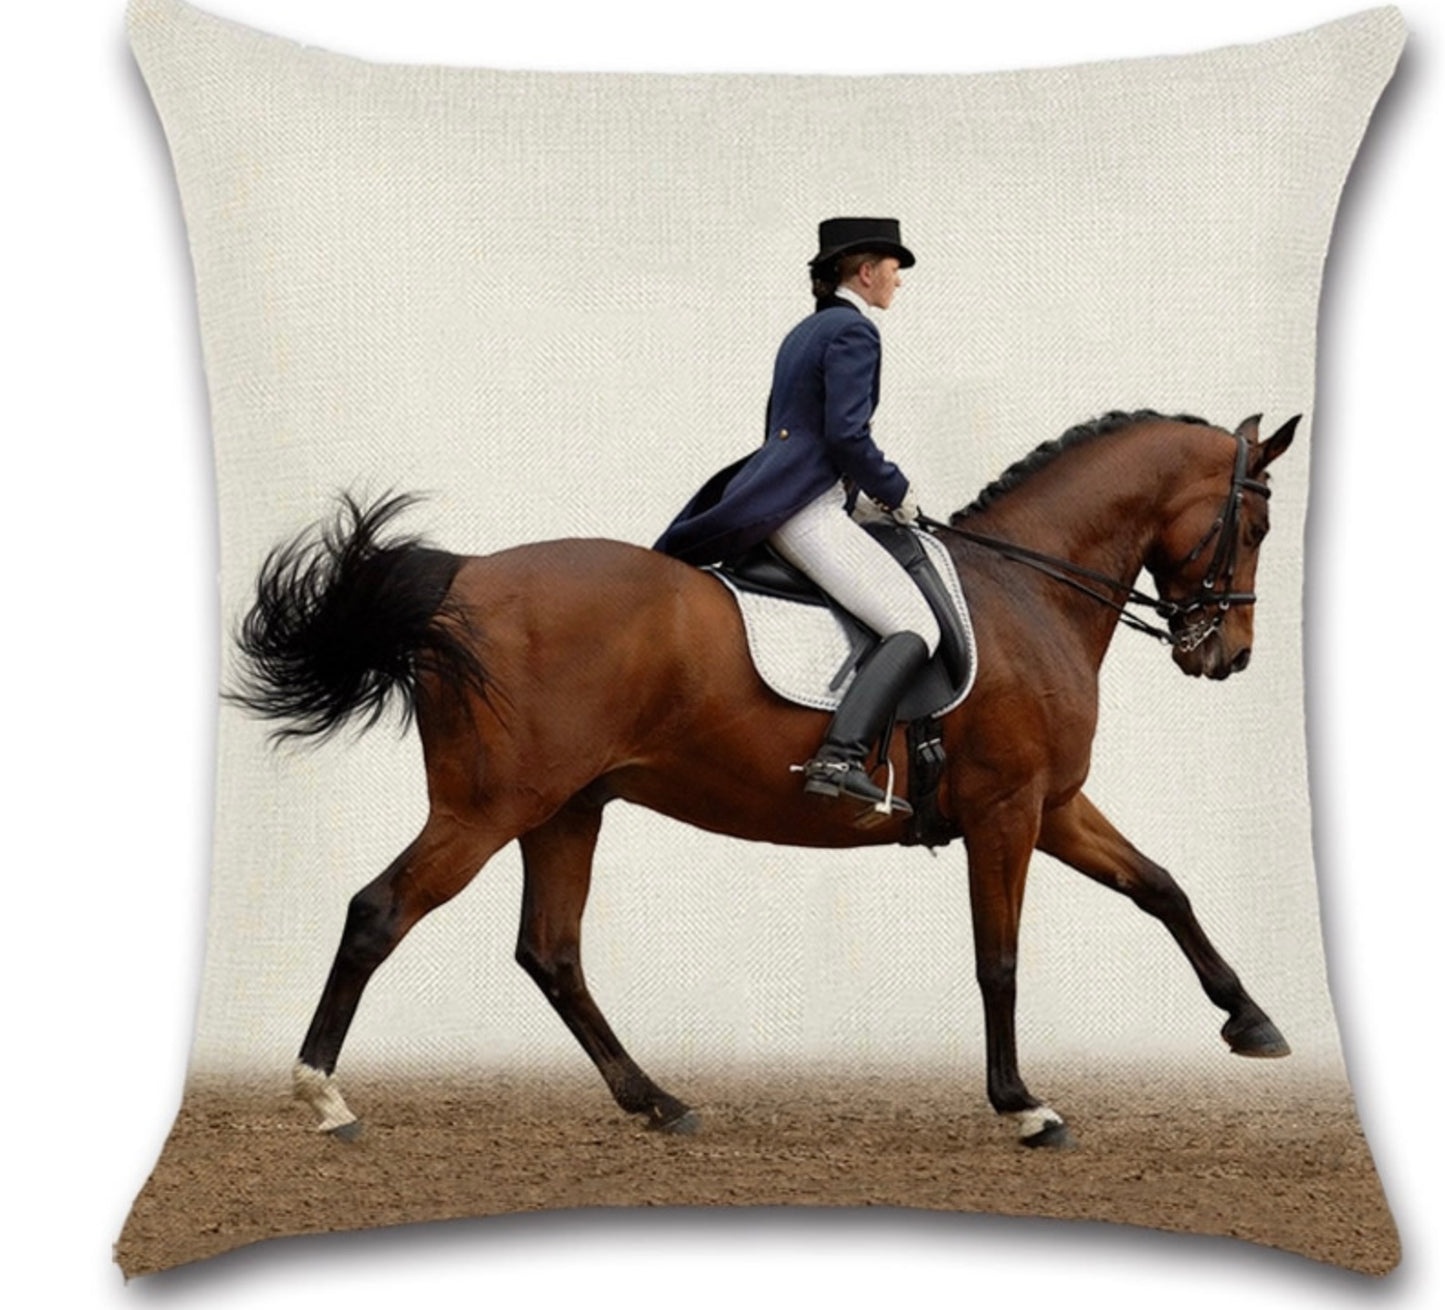 Horse riding cushion cover